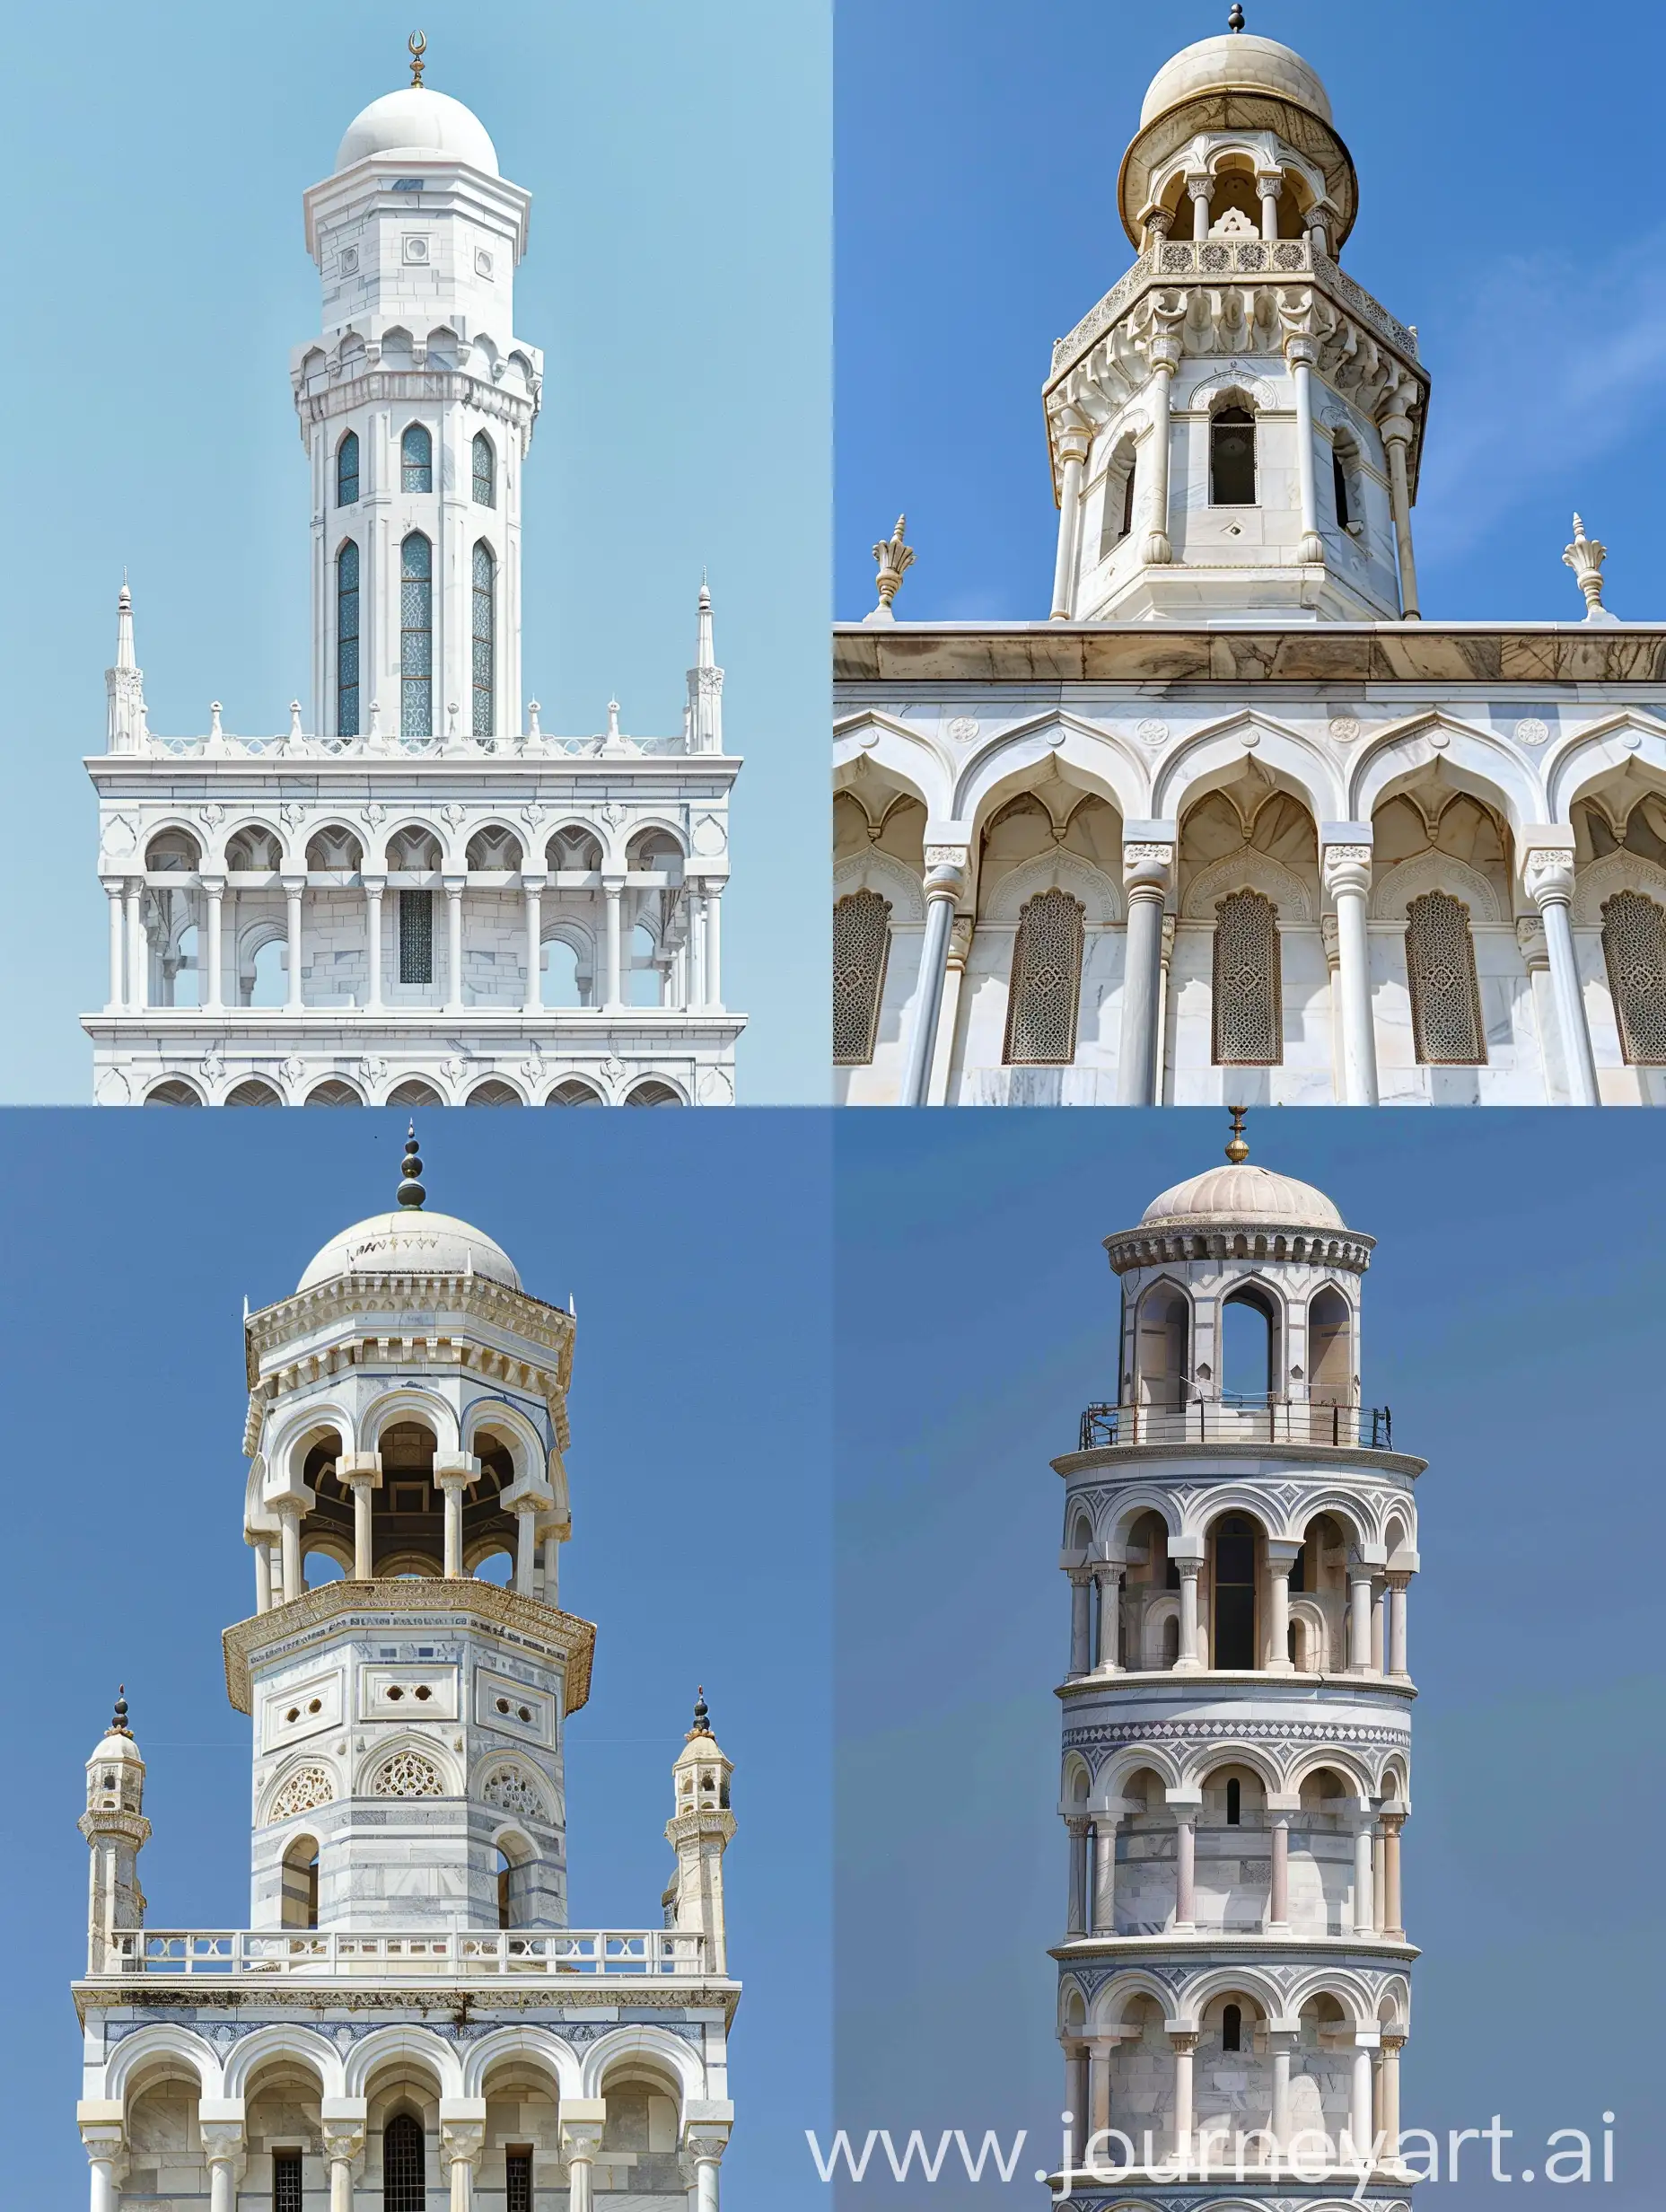 MughalInspired-Leaning-Tower-of-Pisa-with-Gurudwara-Dome